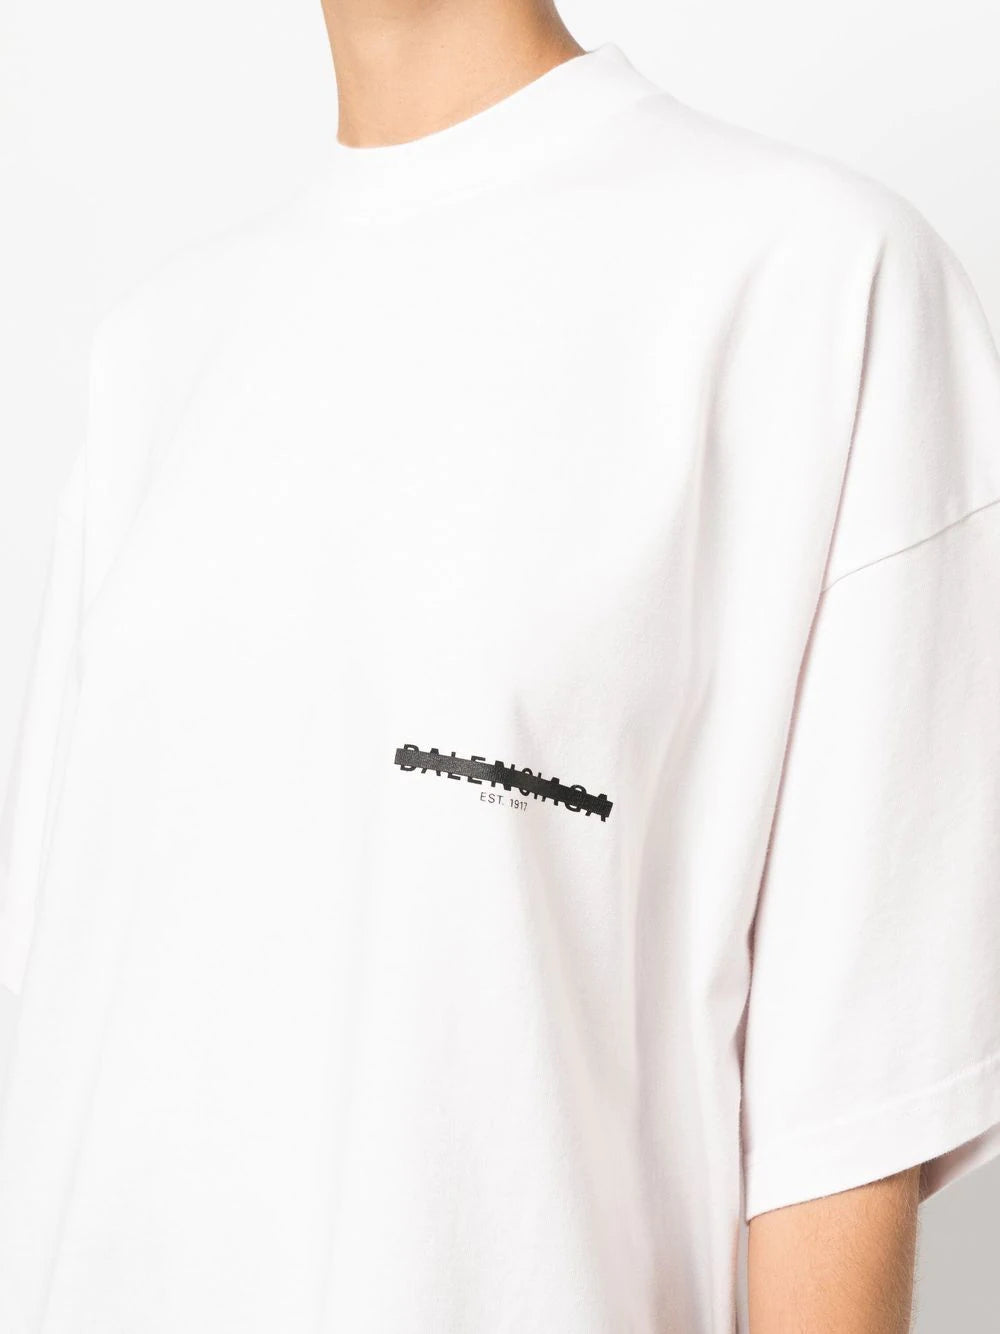 Balenciaga Oversize T-shirt in White for Men